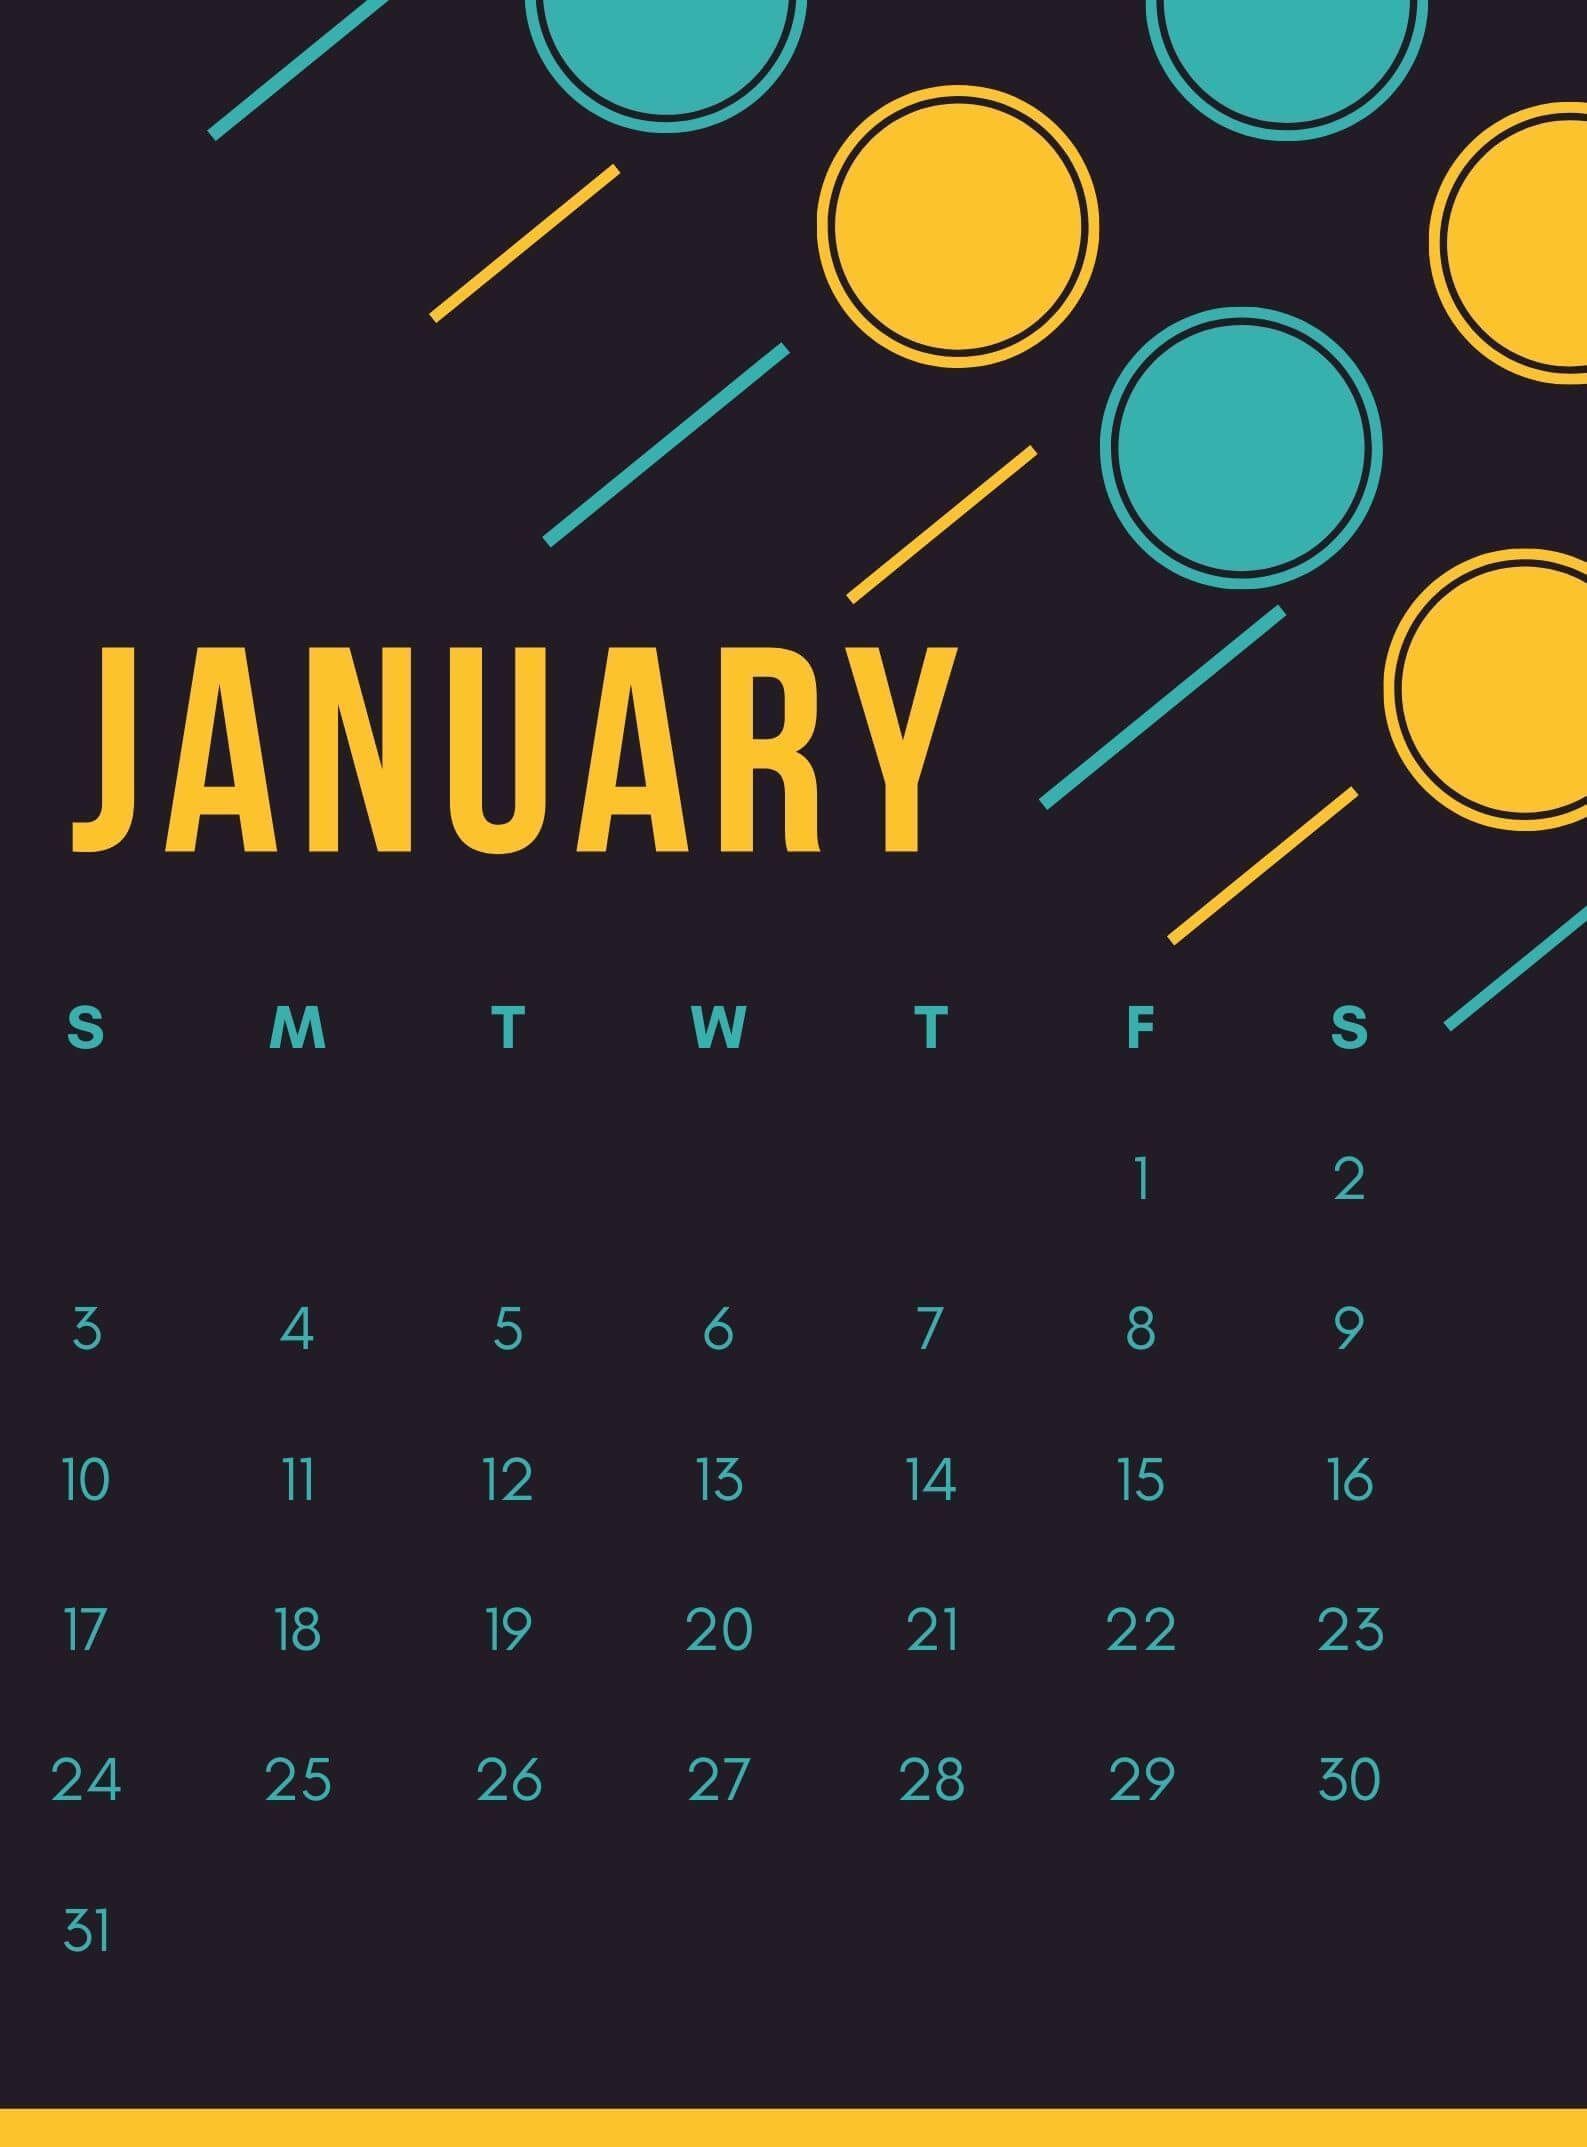 January Calendar Wallpaper For iPhone